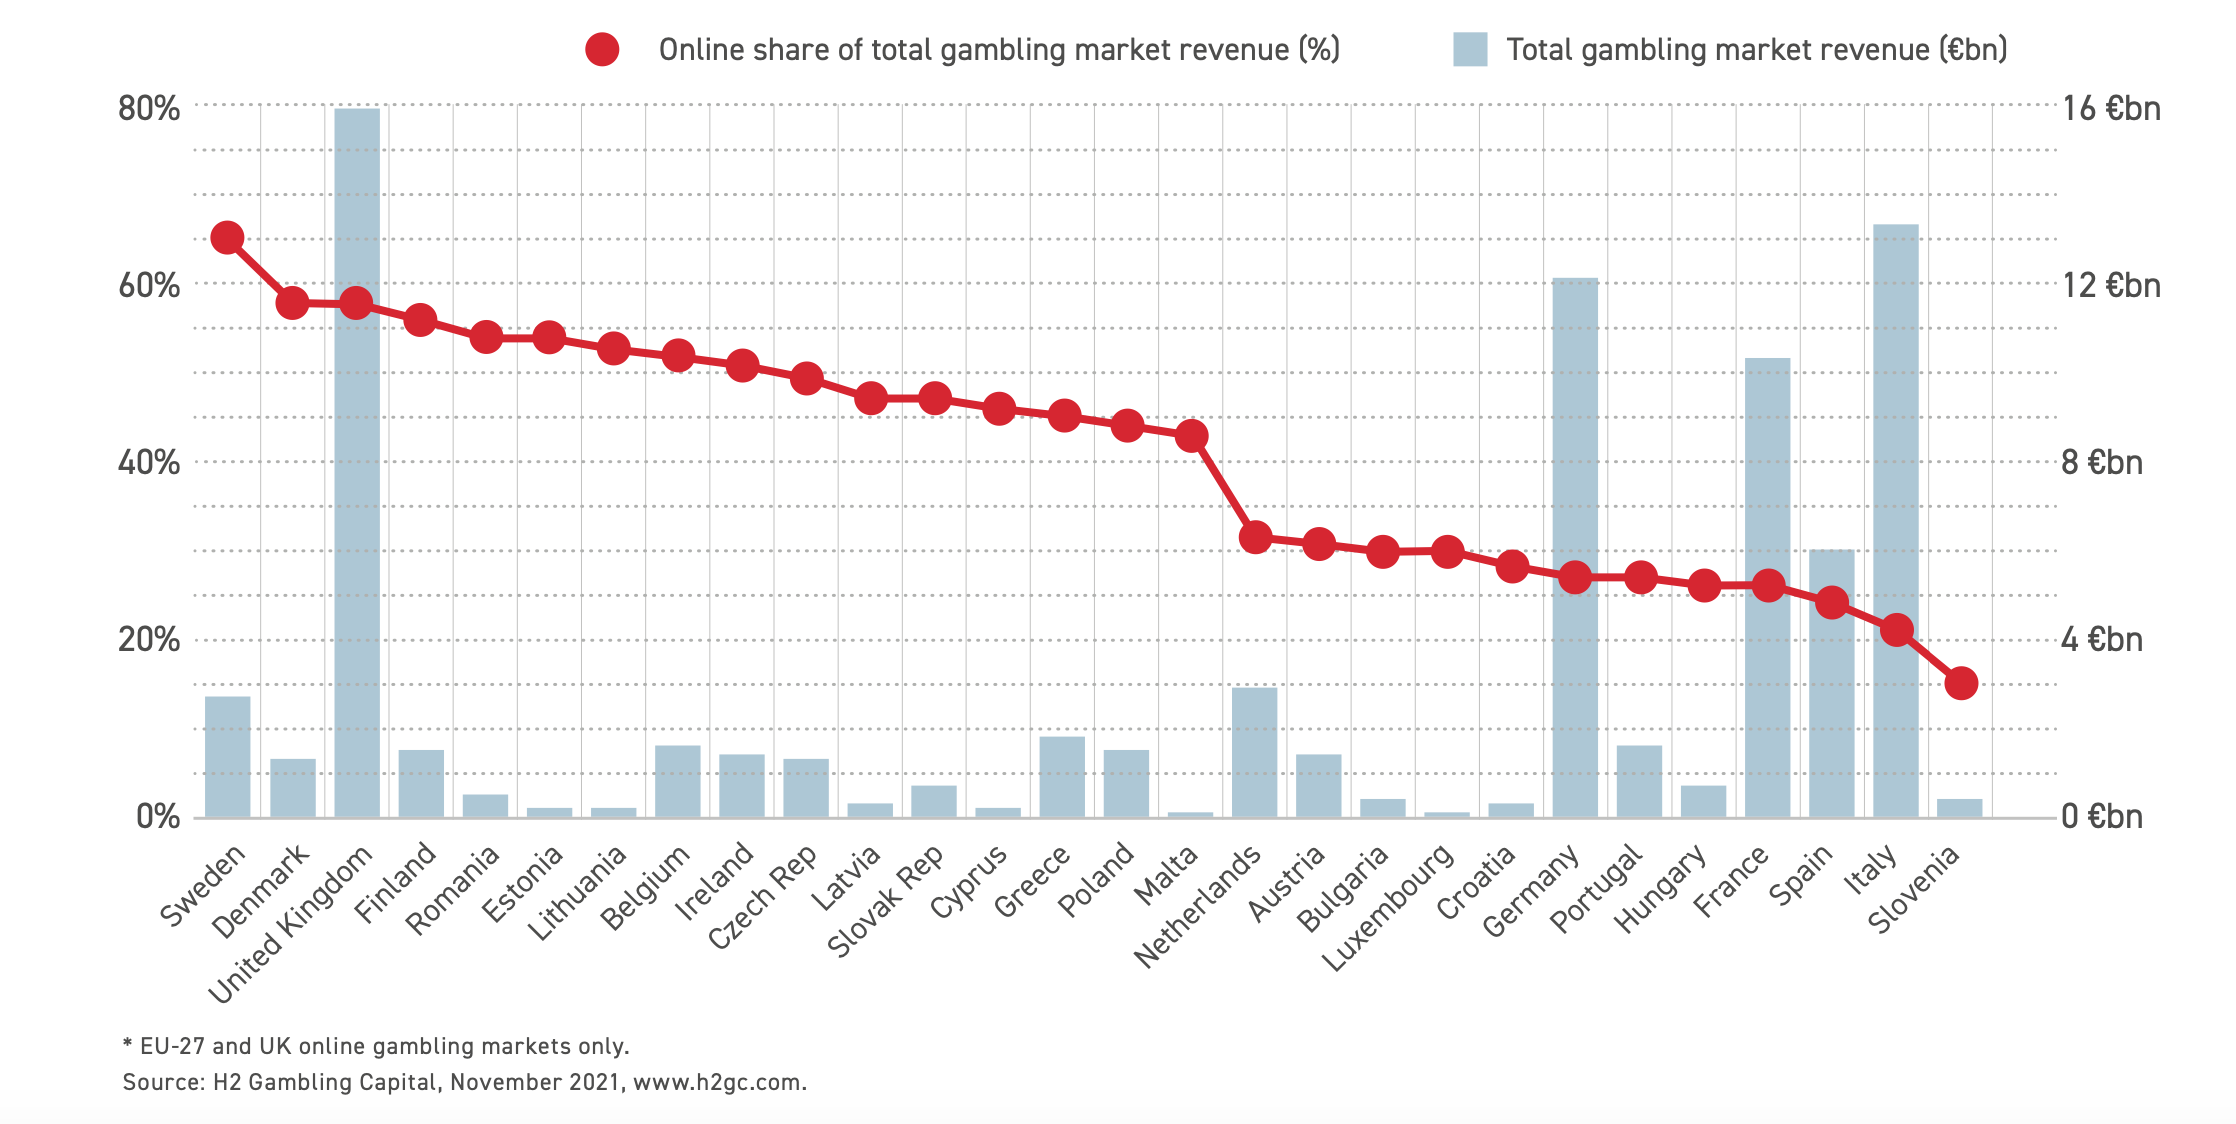 Online gambling shares of national gambling markets (2020)